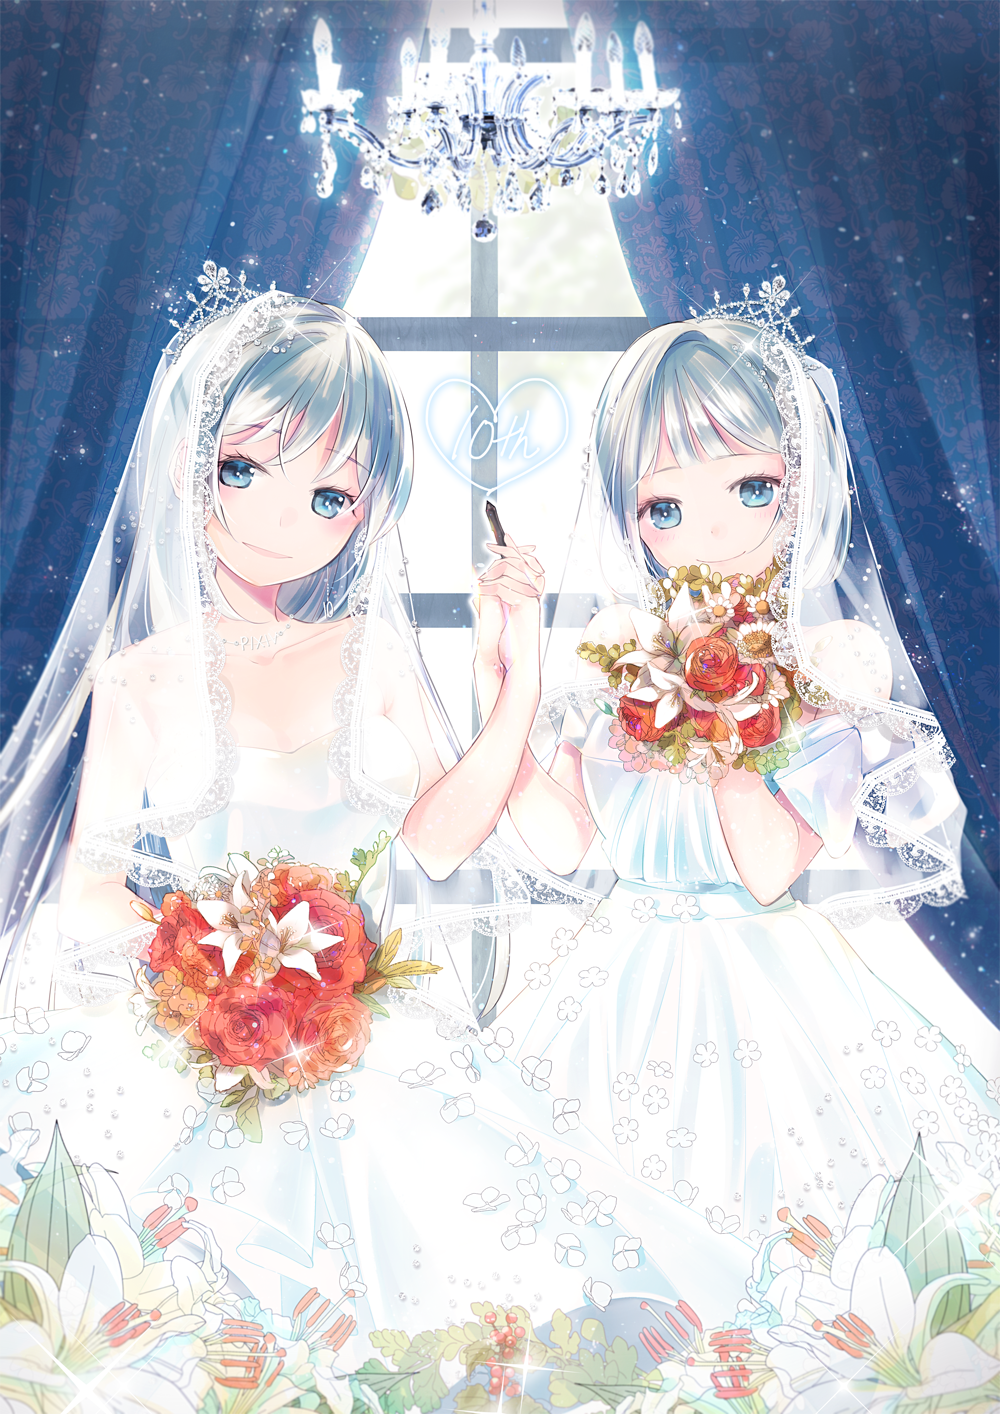 Anime 1000x1414 anime anime girls original characters wedding dress weddings two women yuri artwork digital art fan art